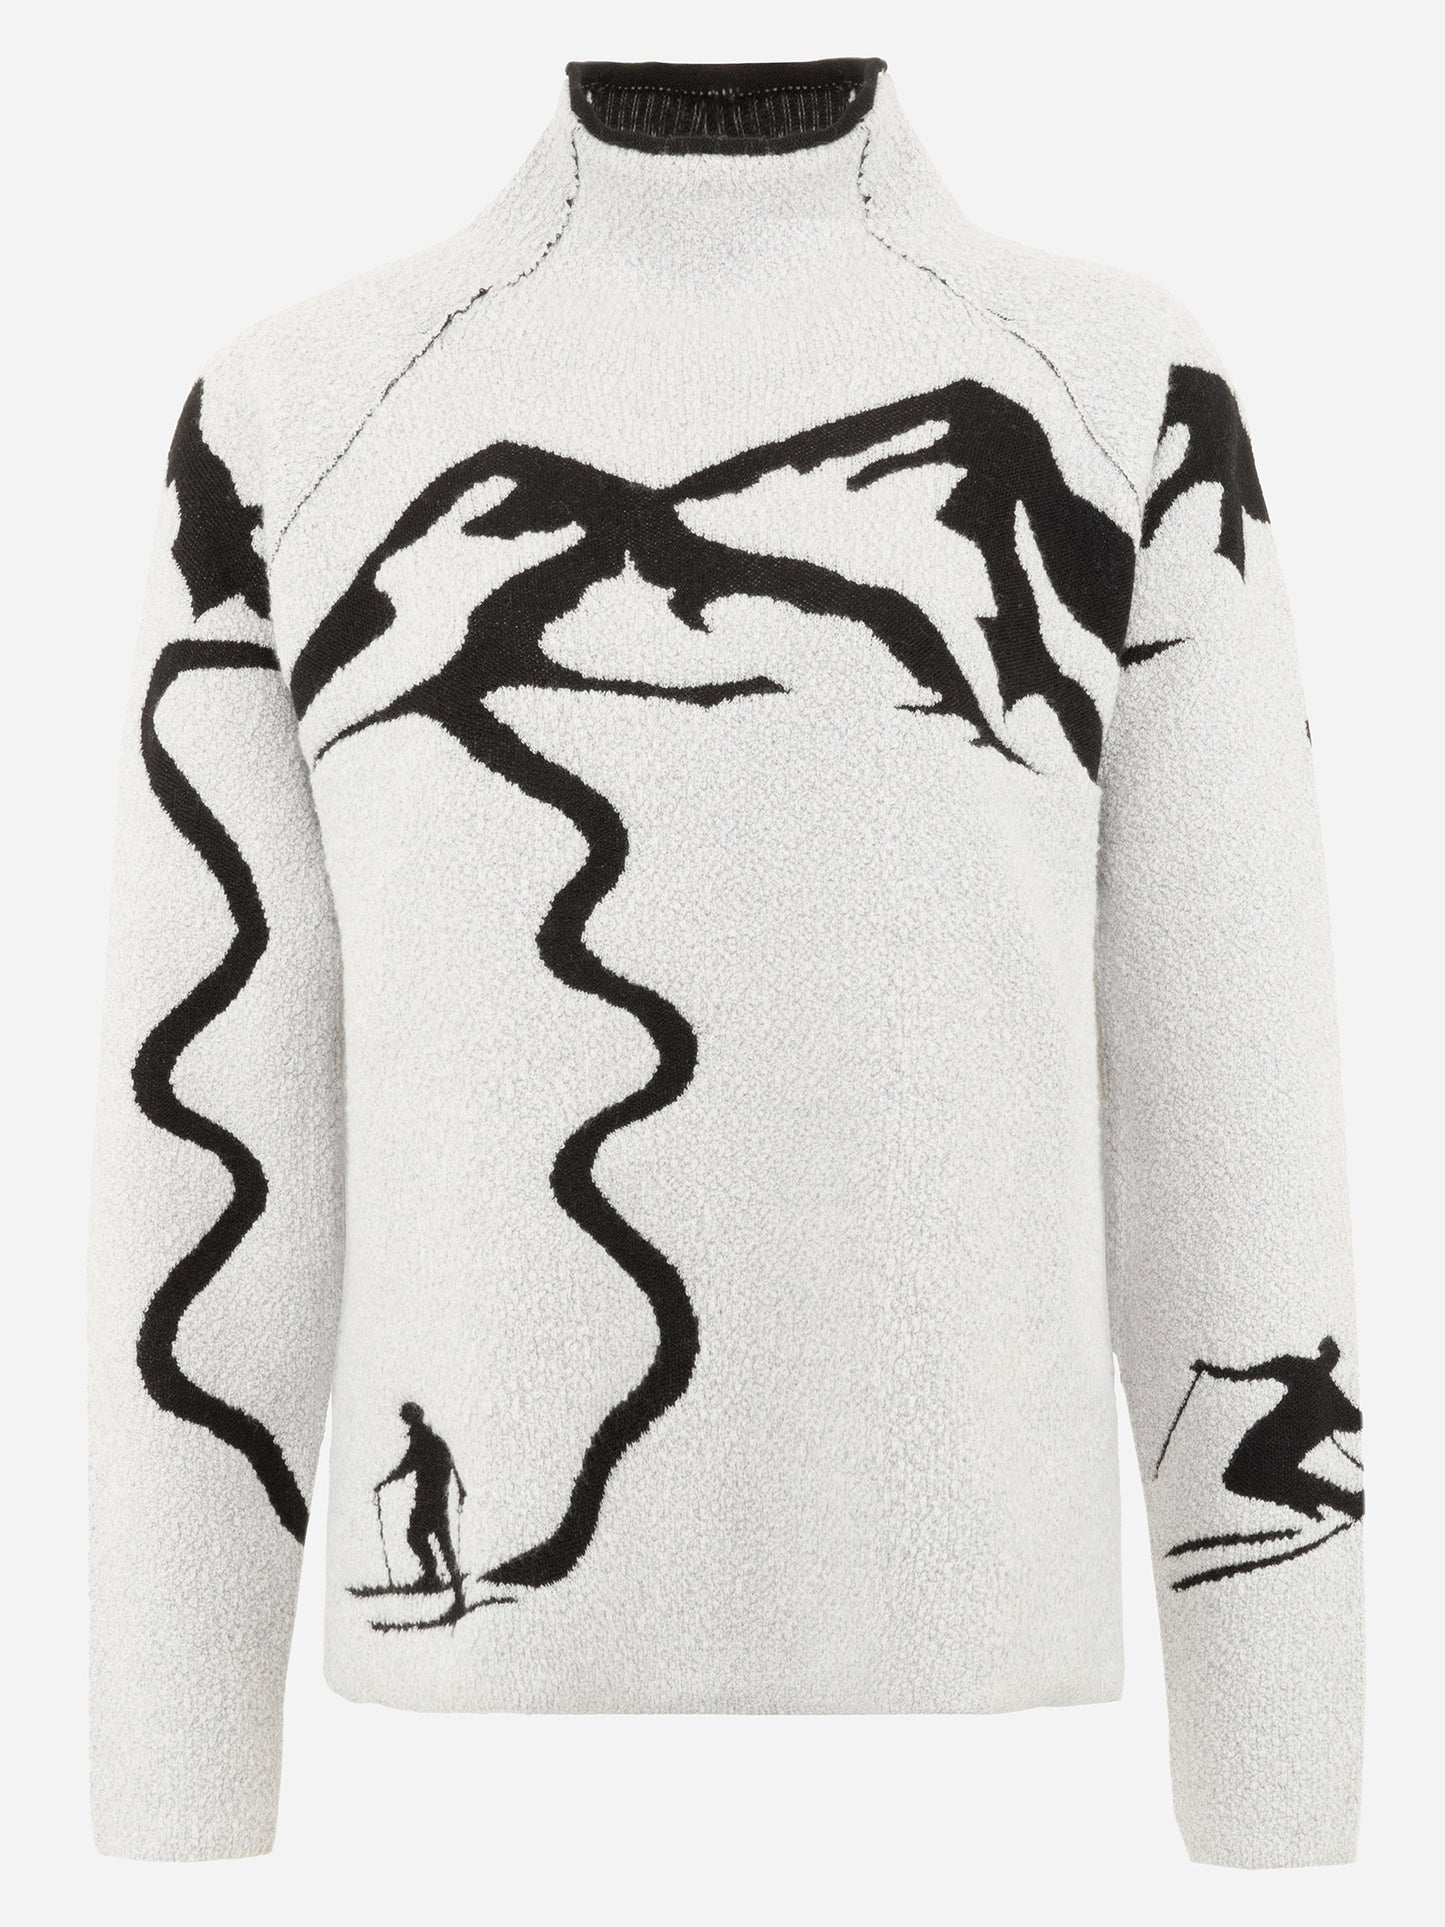 Frauenschuh Women's Chatel Sweater